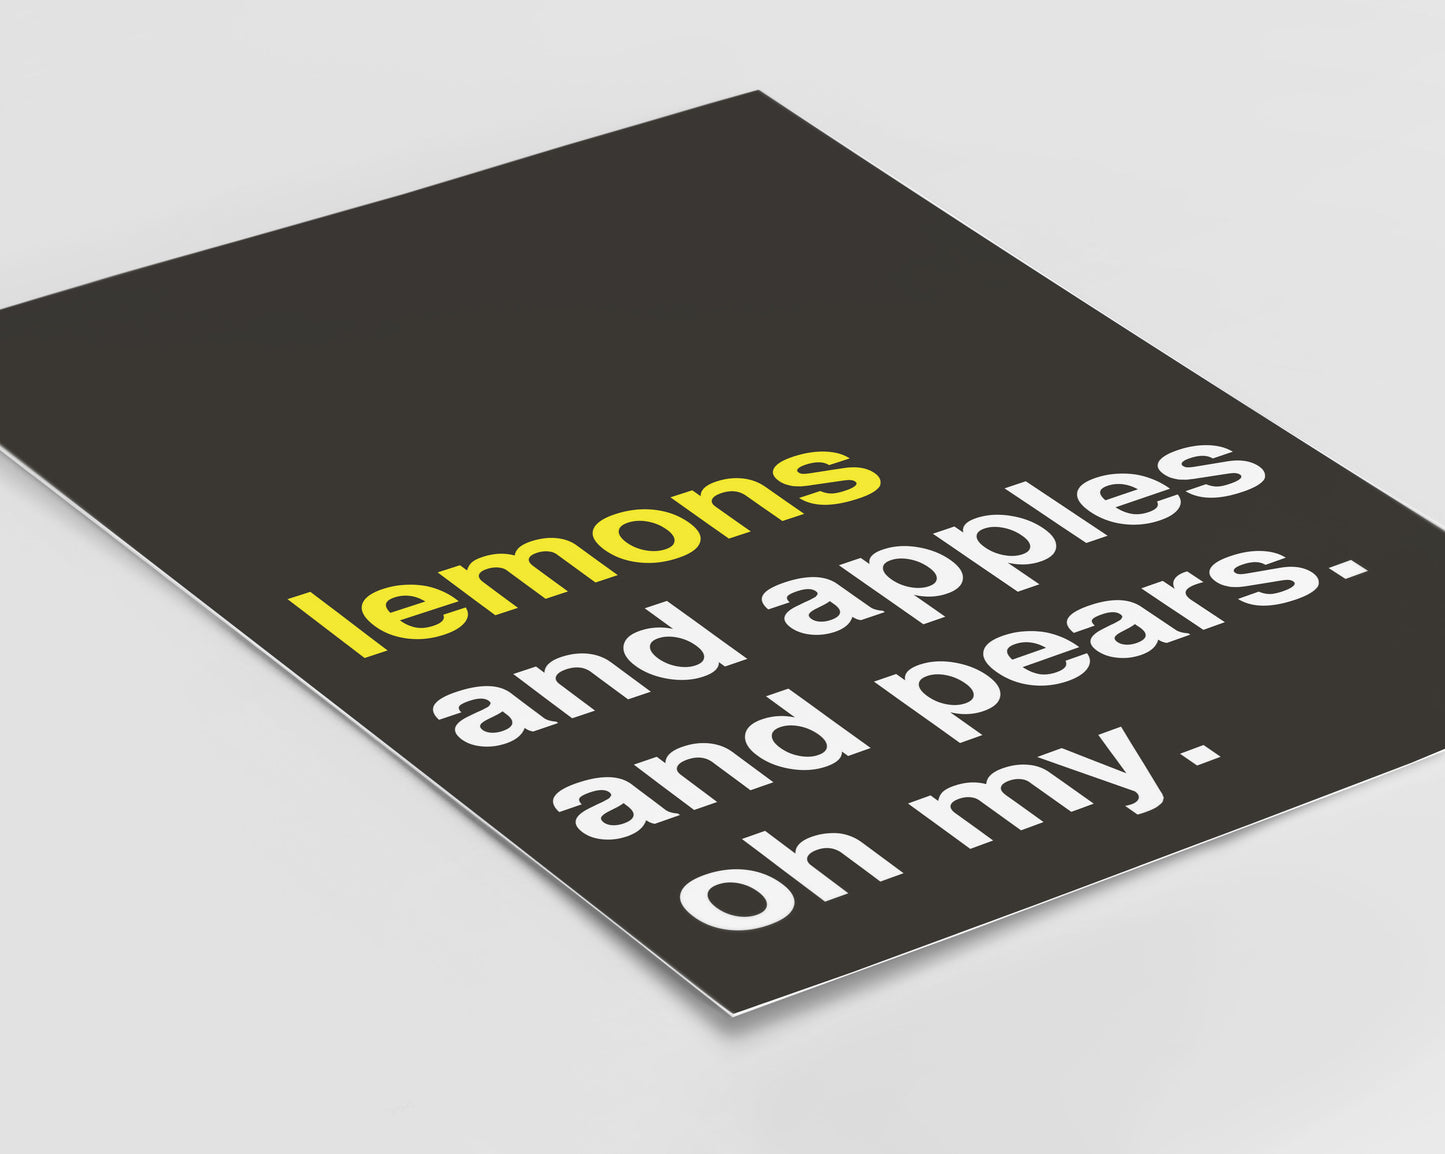 Lemons and Apples Statement Black Print